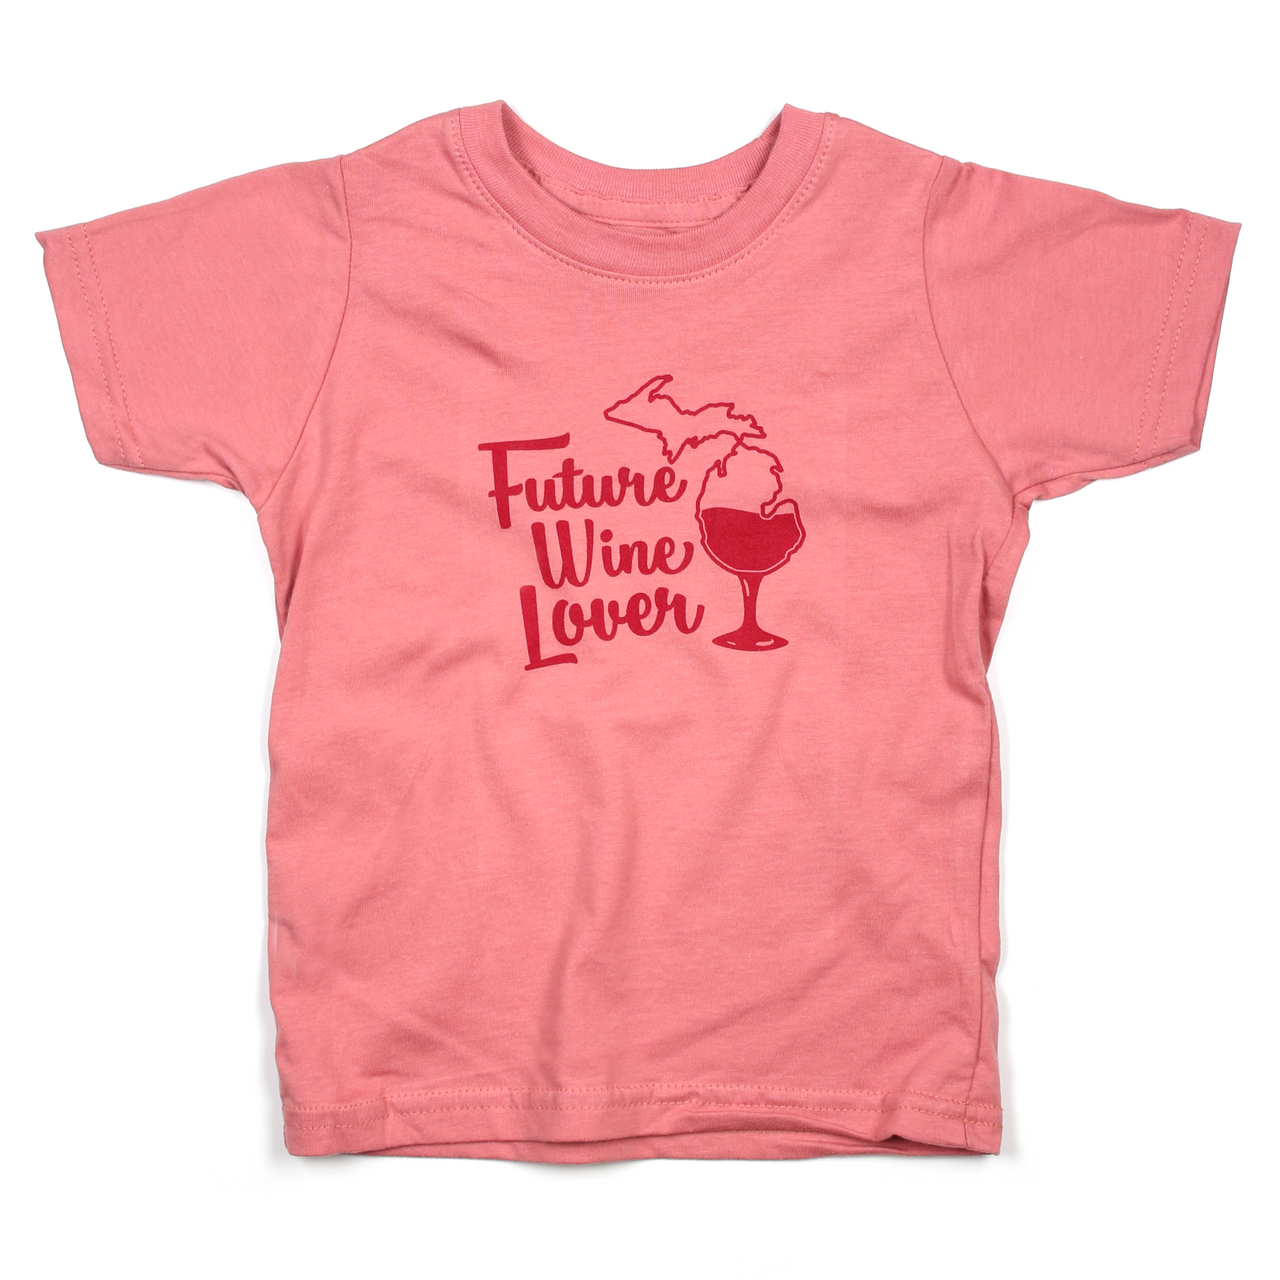 Future Michigan Wine Lover Toddler Tee